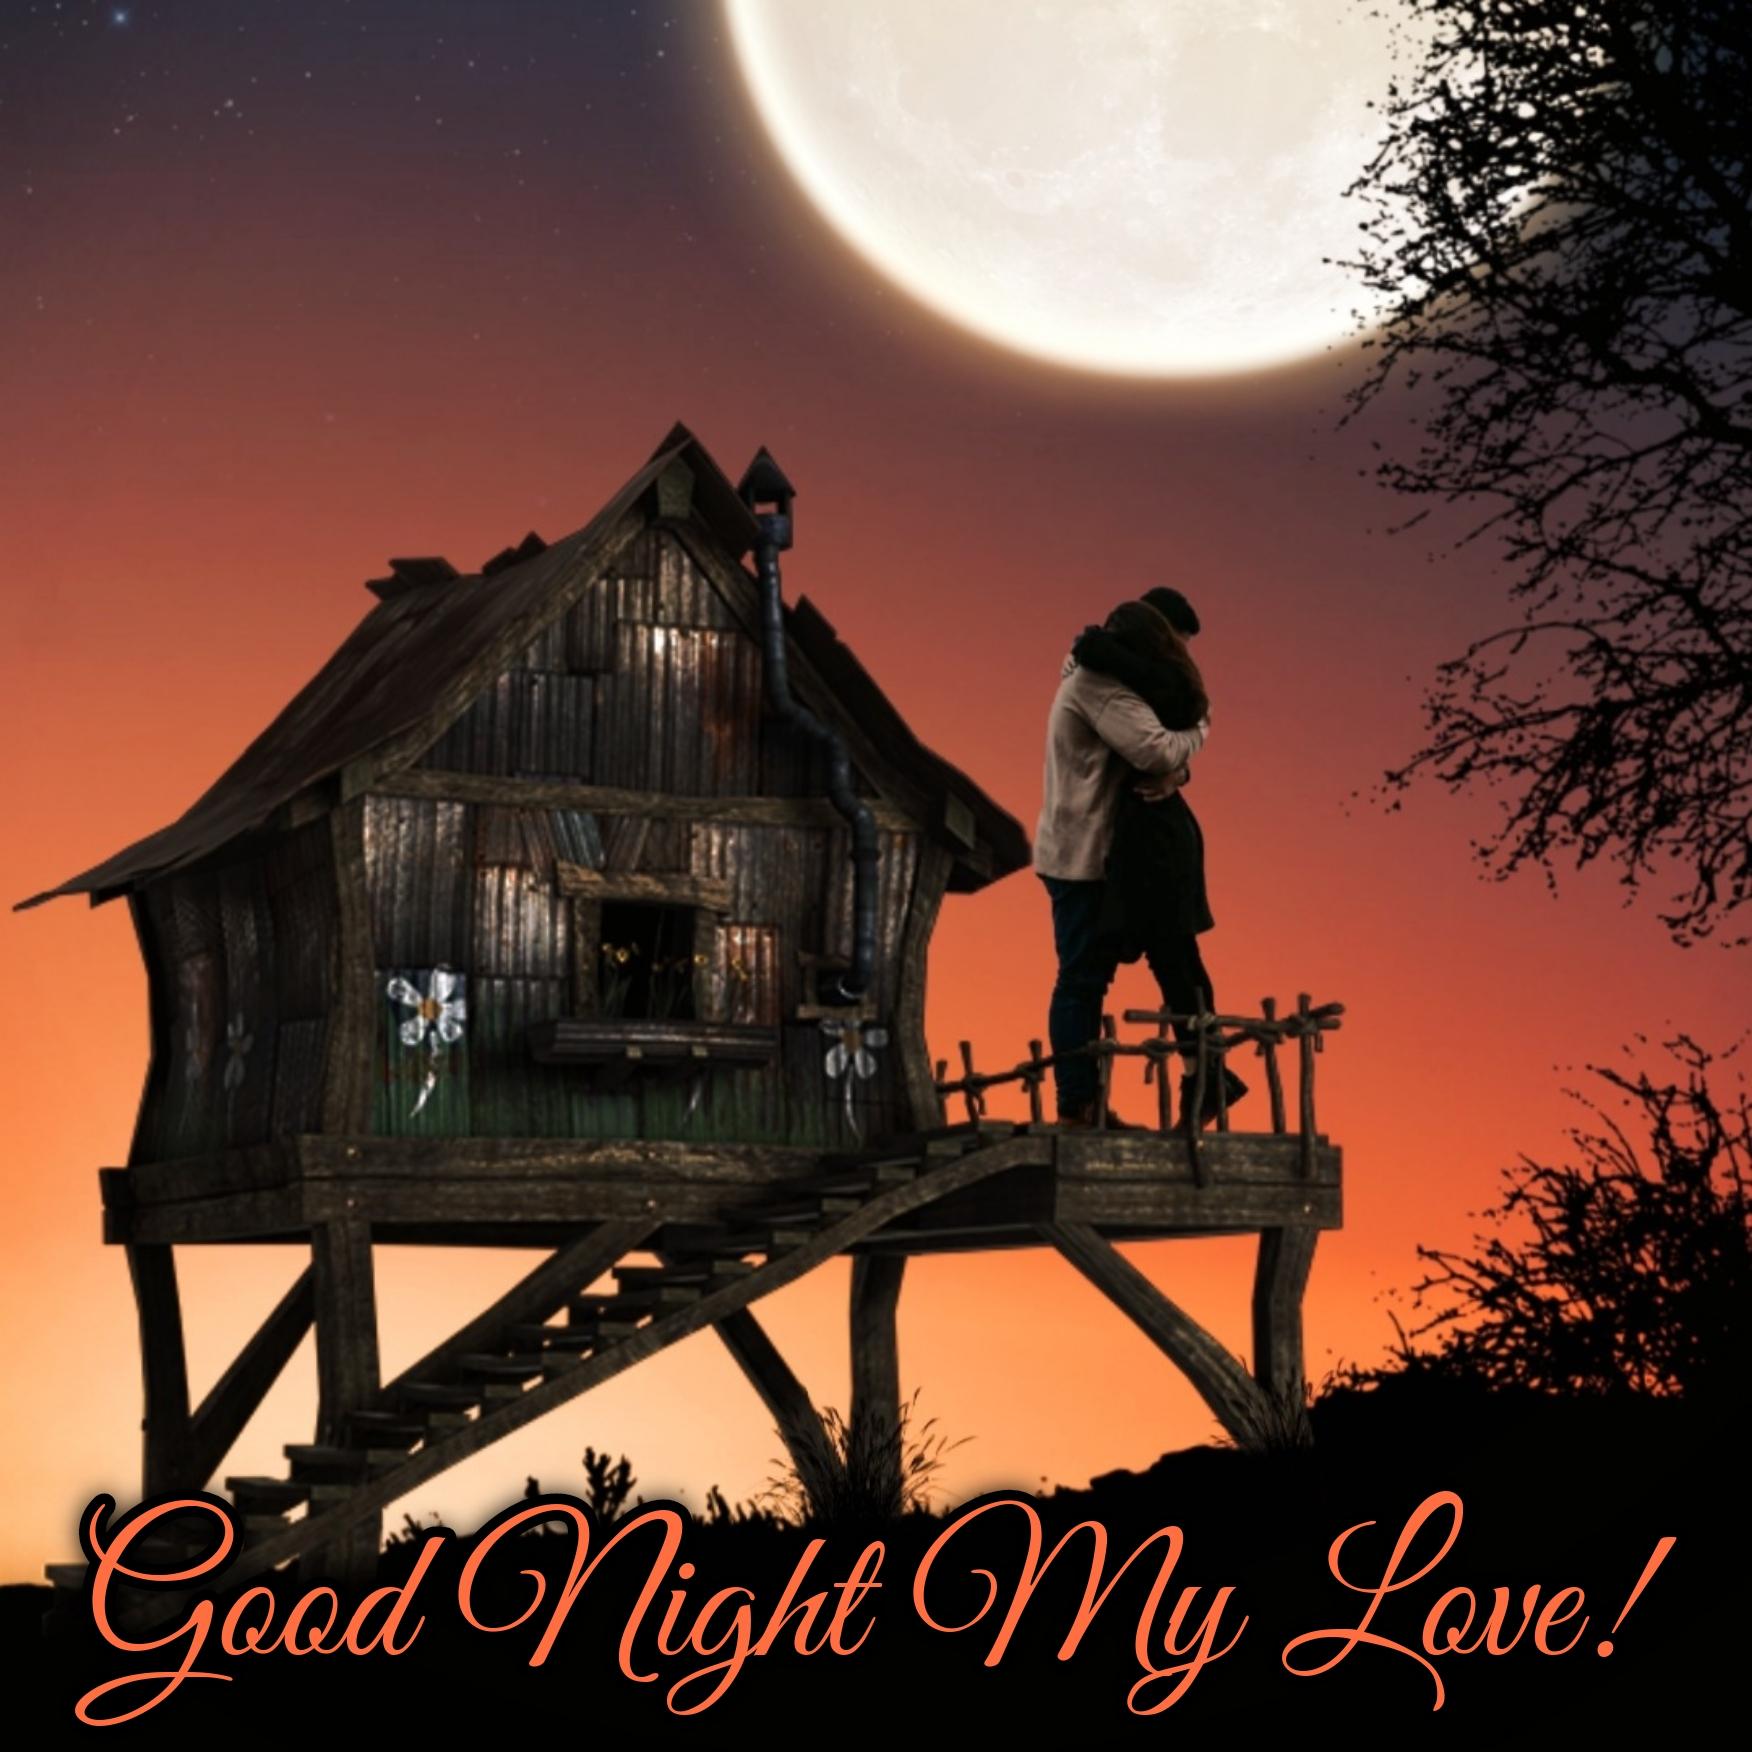 Love Romantic Good Night Images